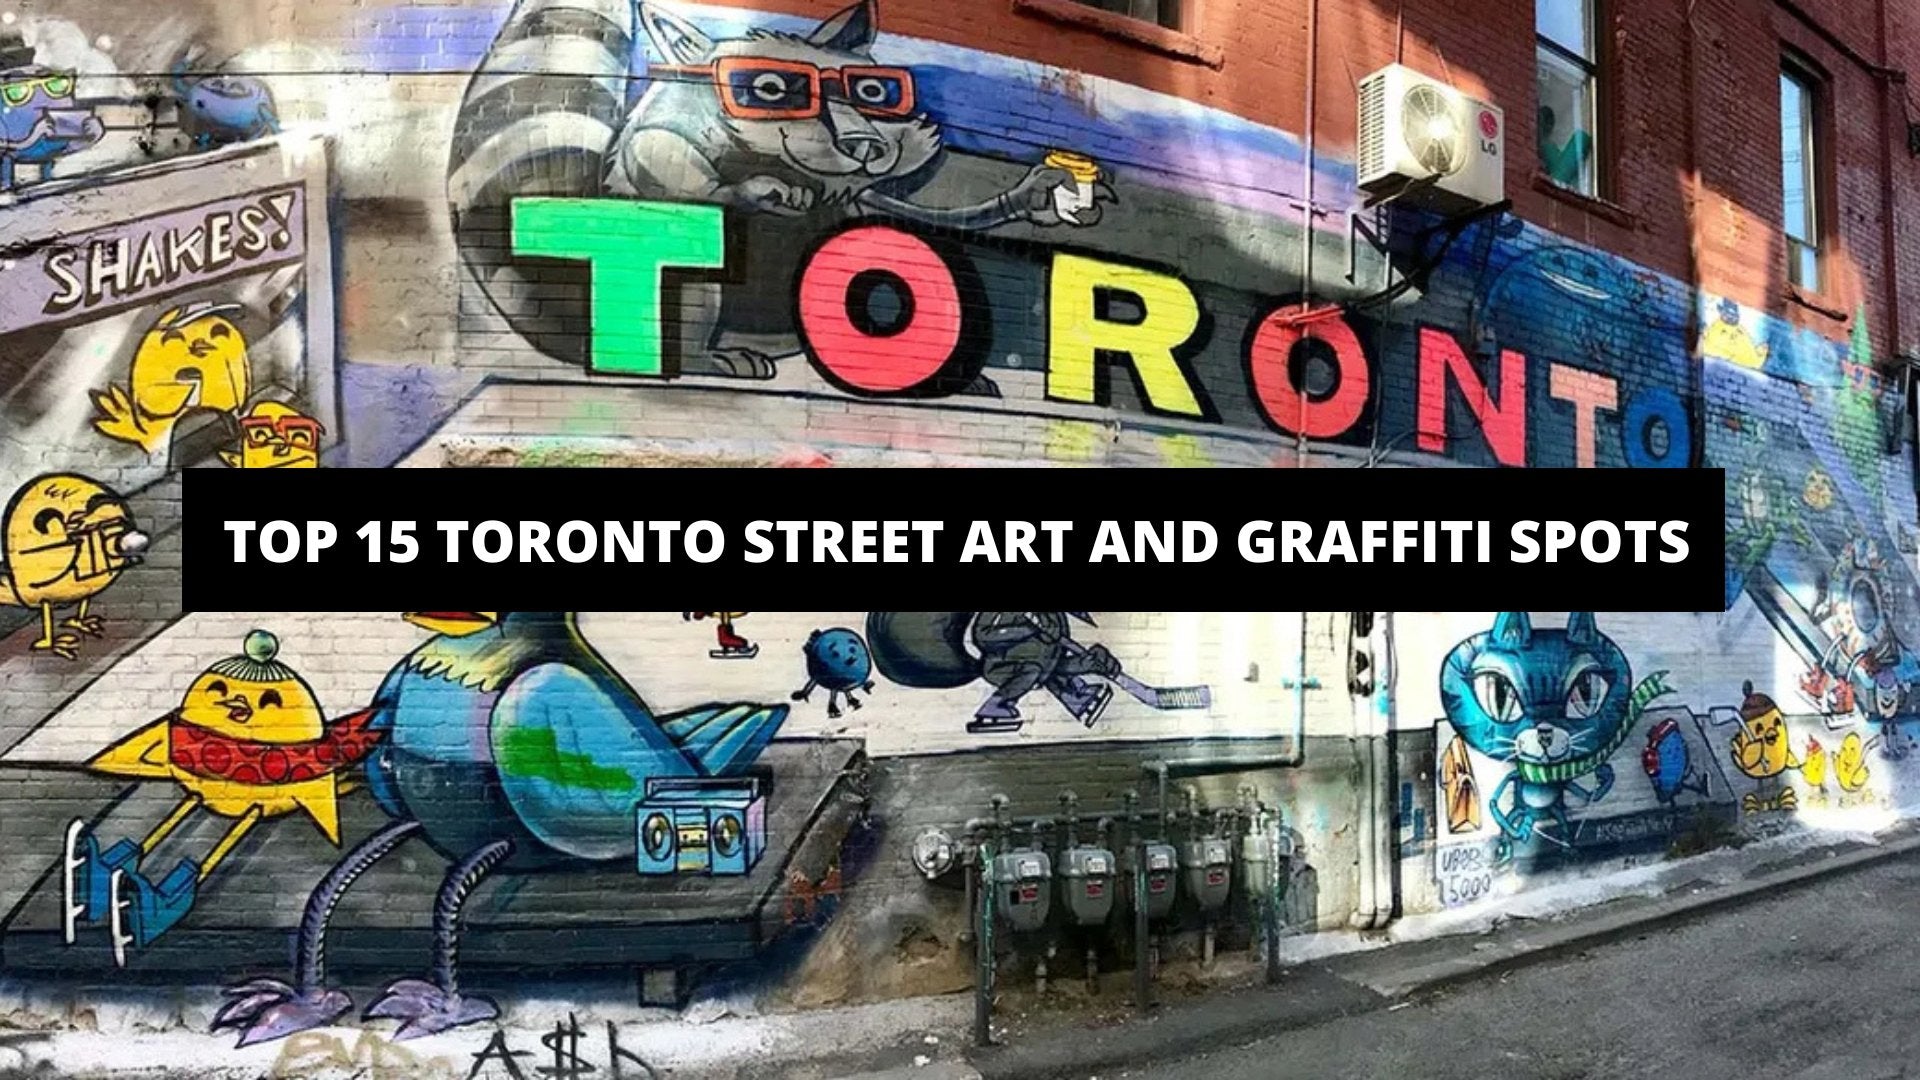 Top 15 Toronto Street Art and Graffiti Spots - The Trendy Art